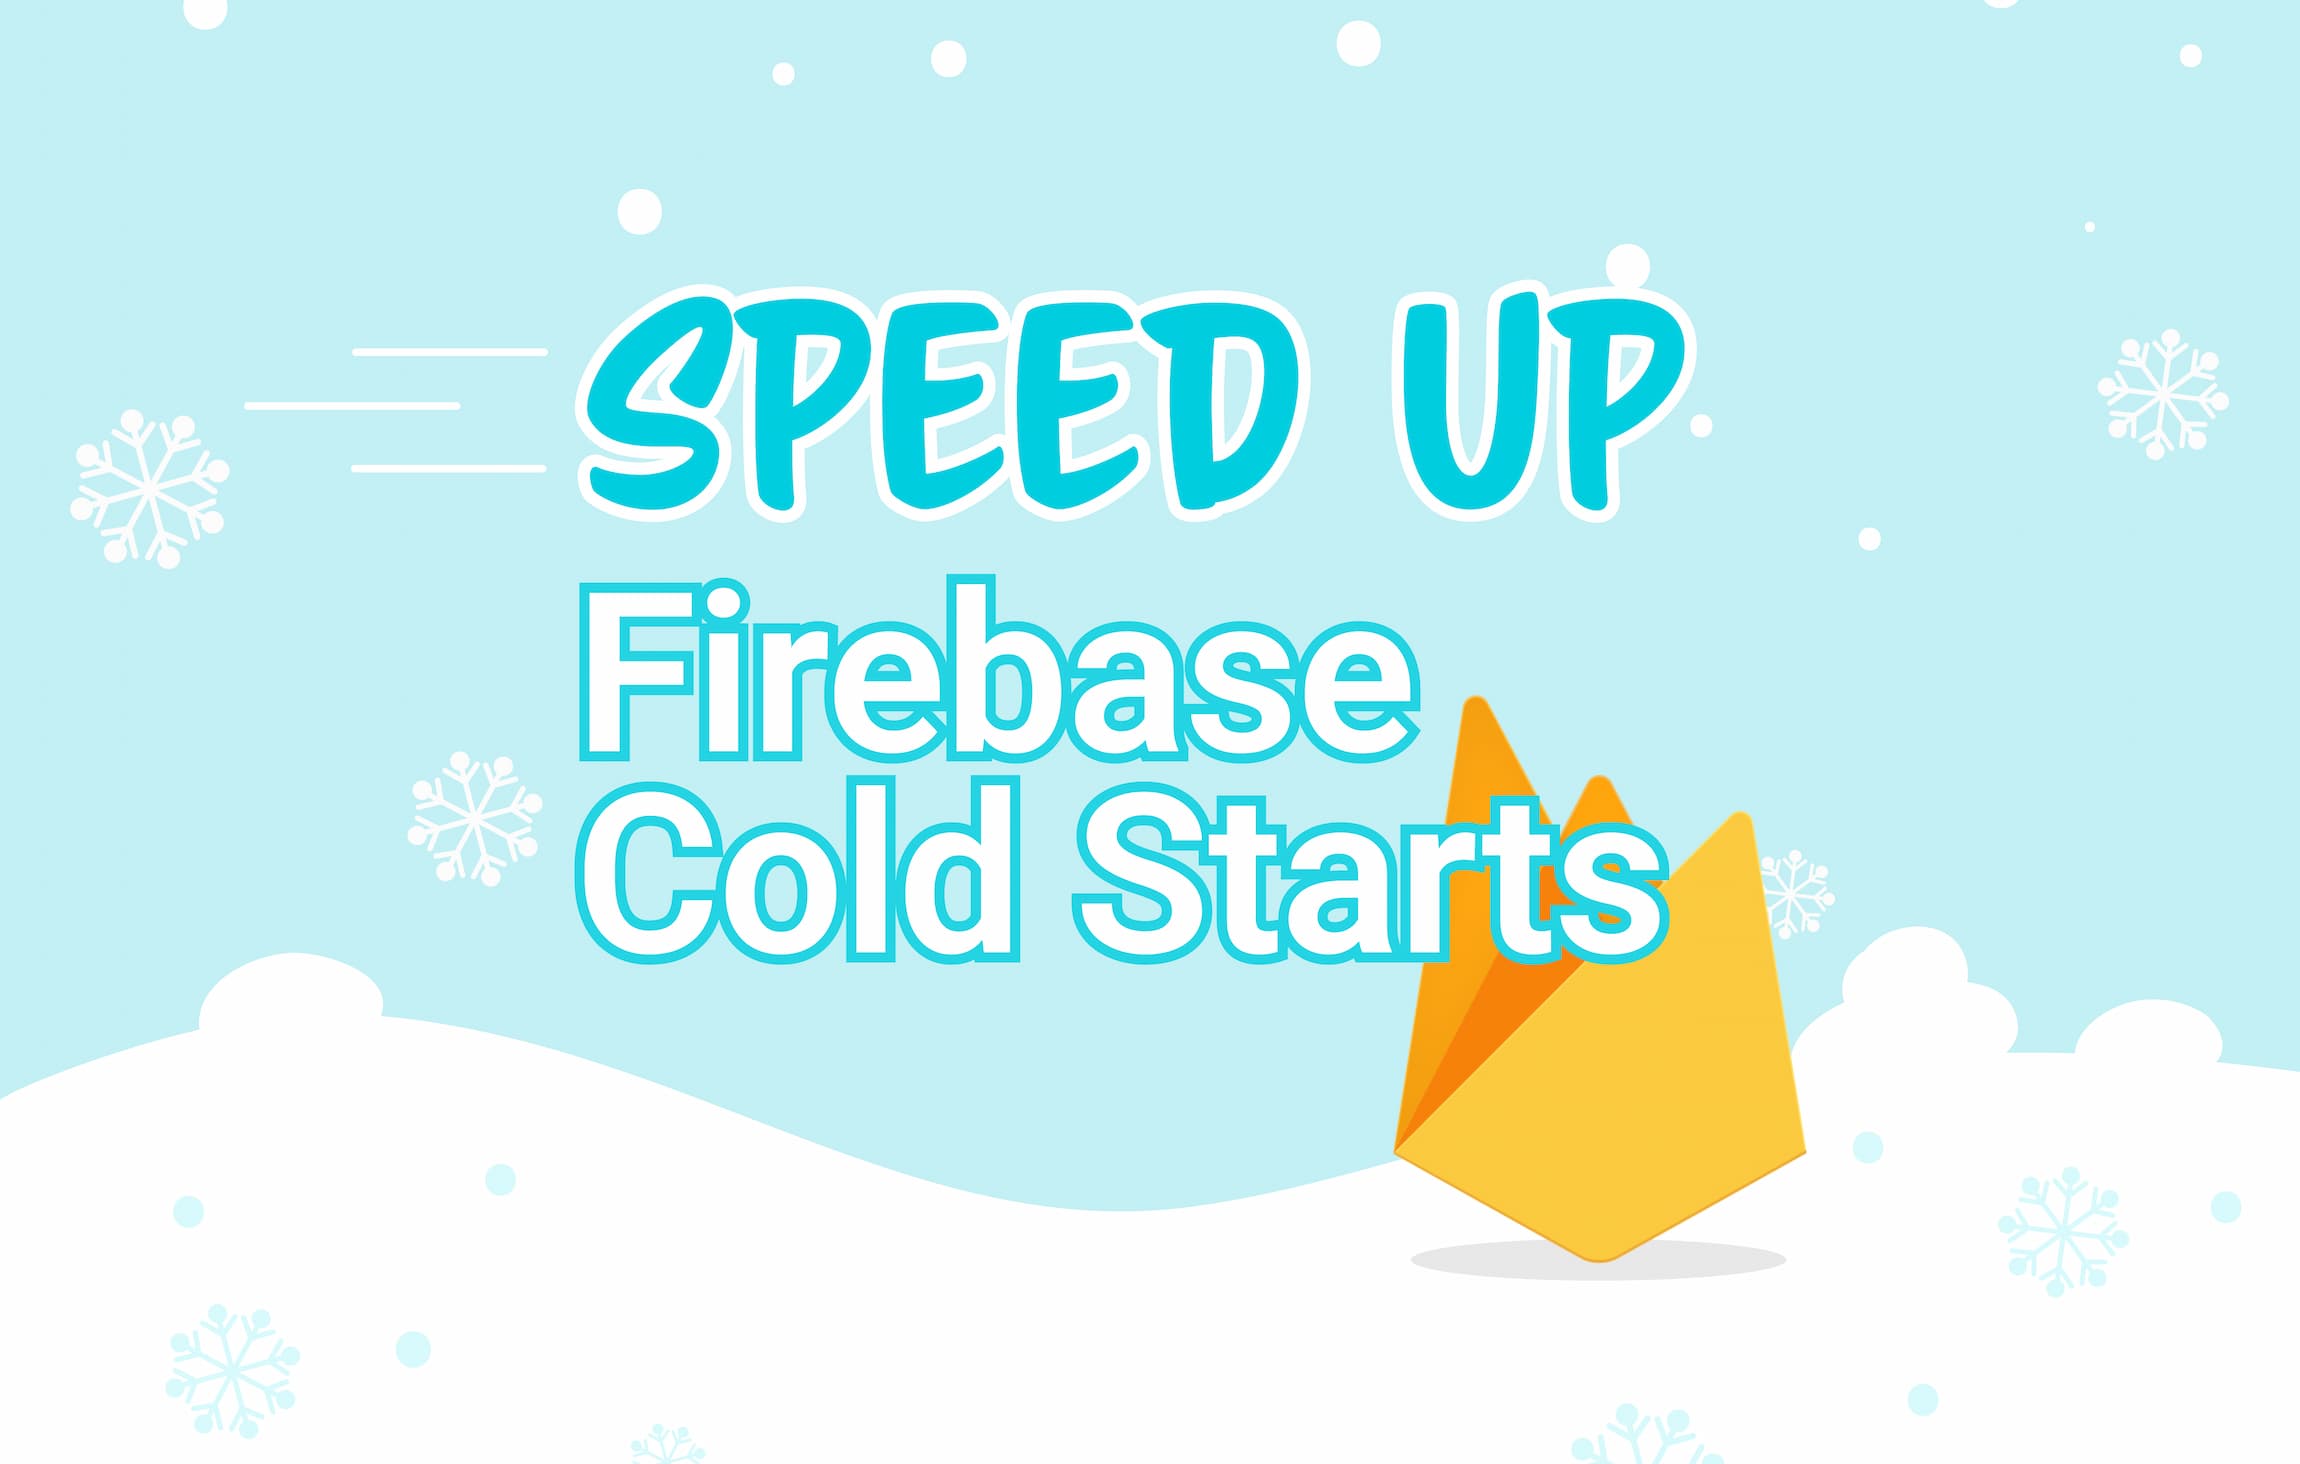 firebase cold start